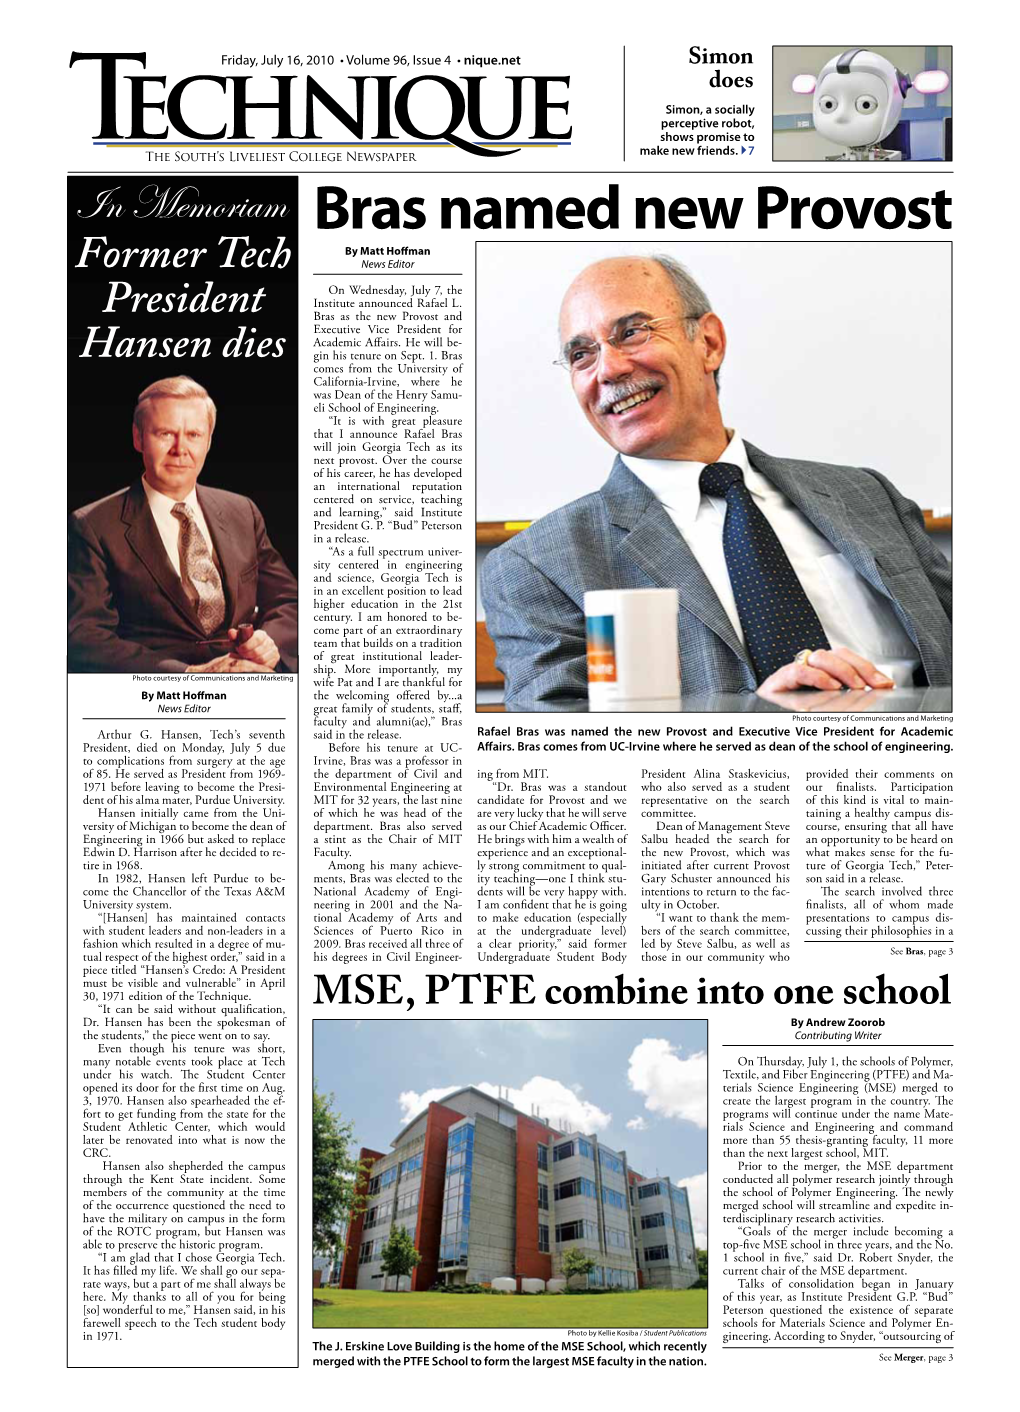 Bras Named New Provost by Matt Hoffman News Editor